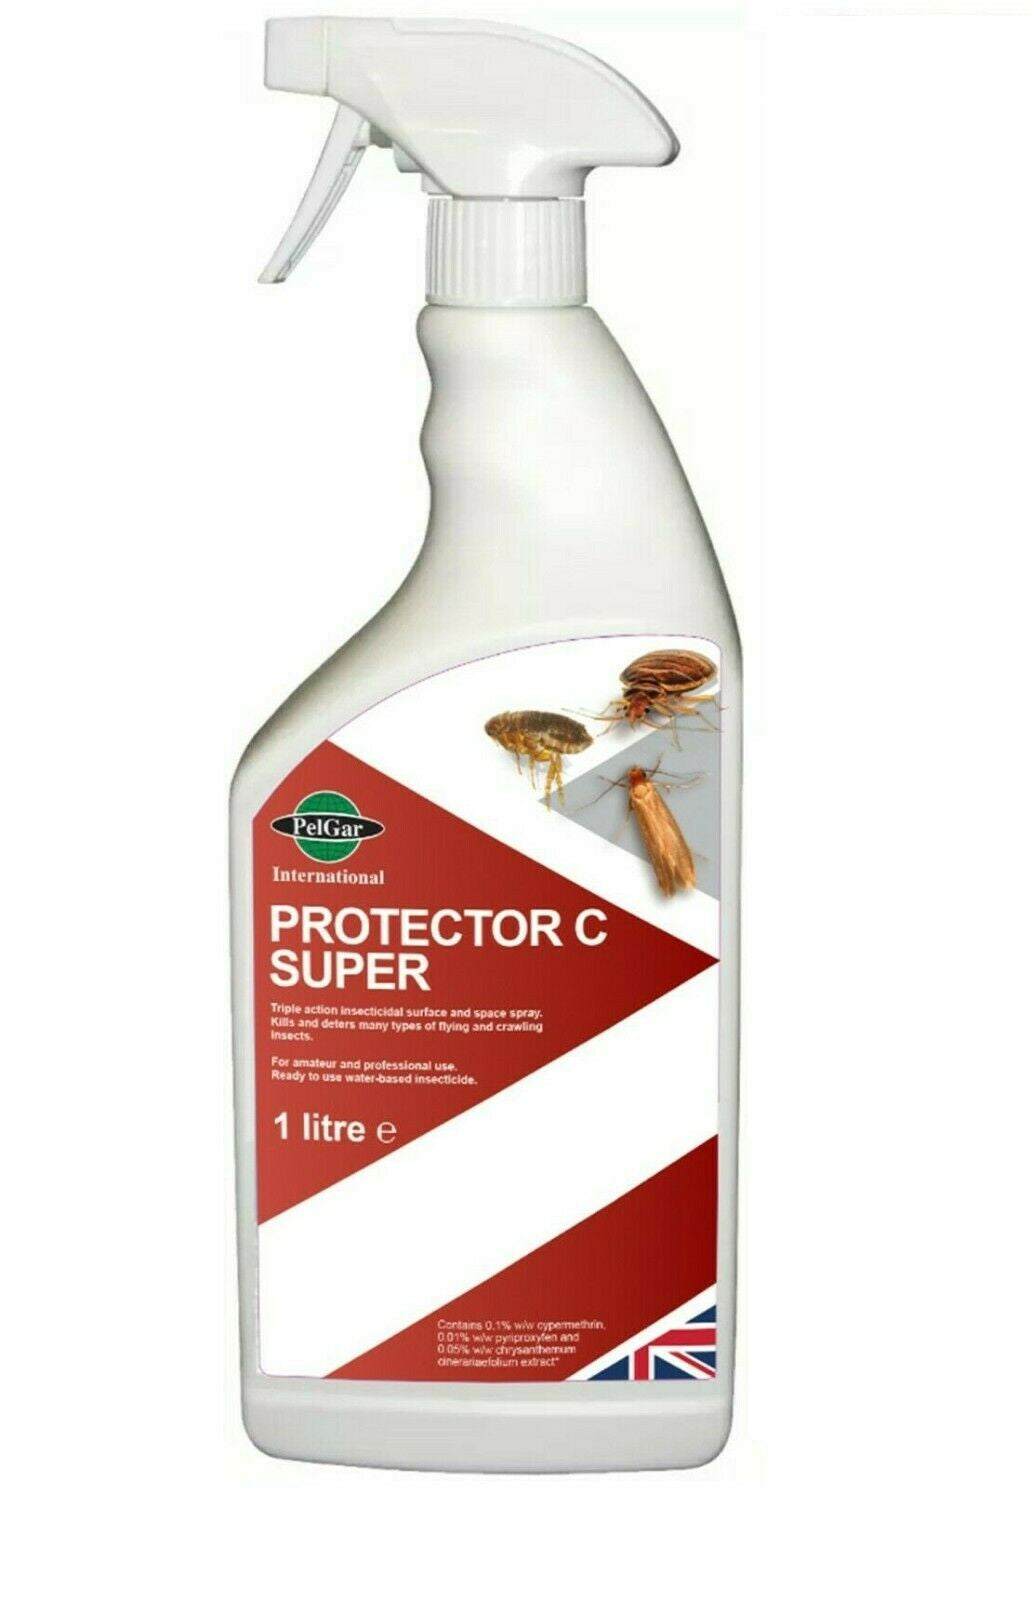 Carpet and Fabric Moth Killer - Protector C Spray 1 L